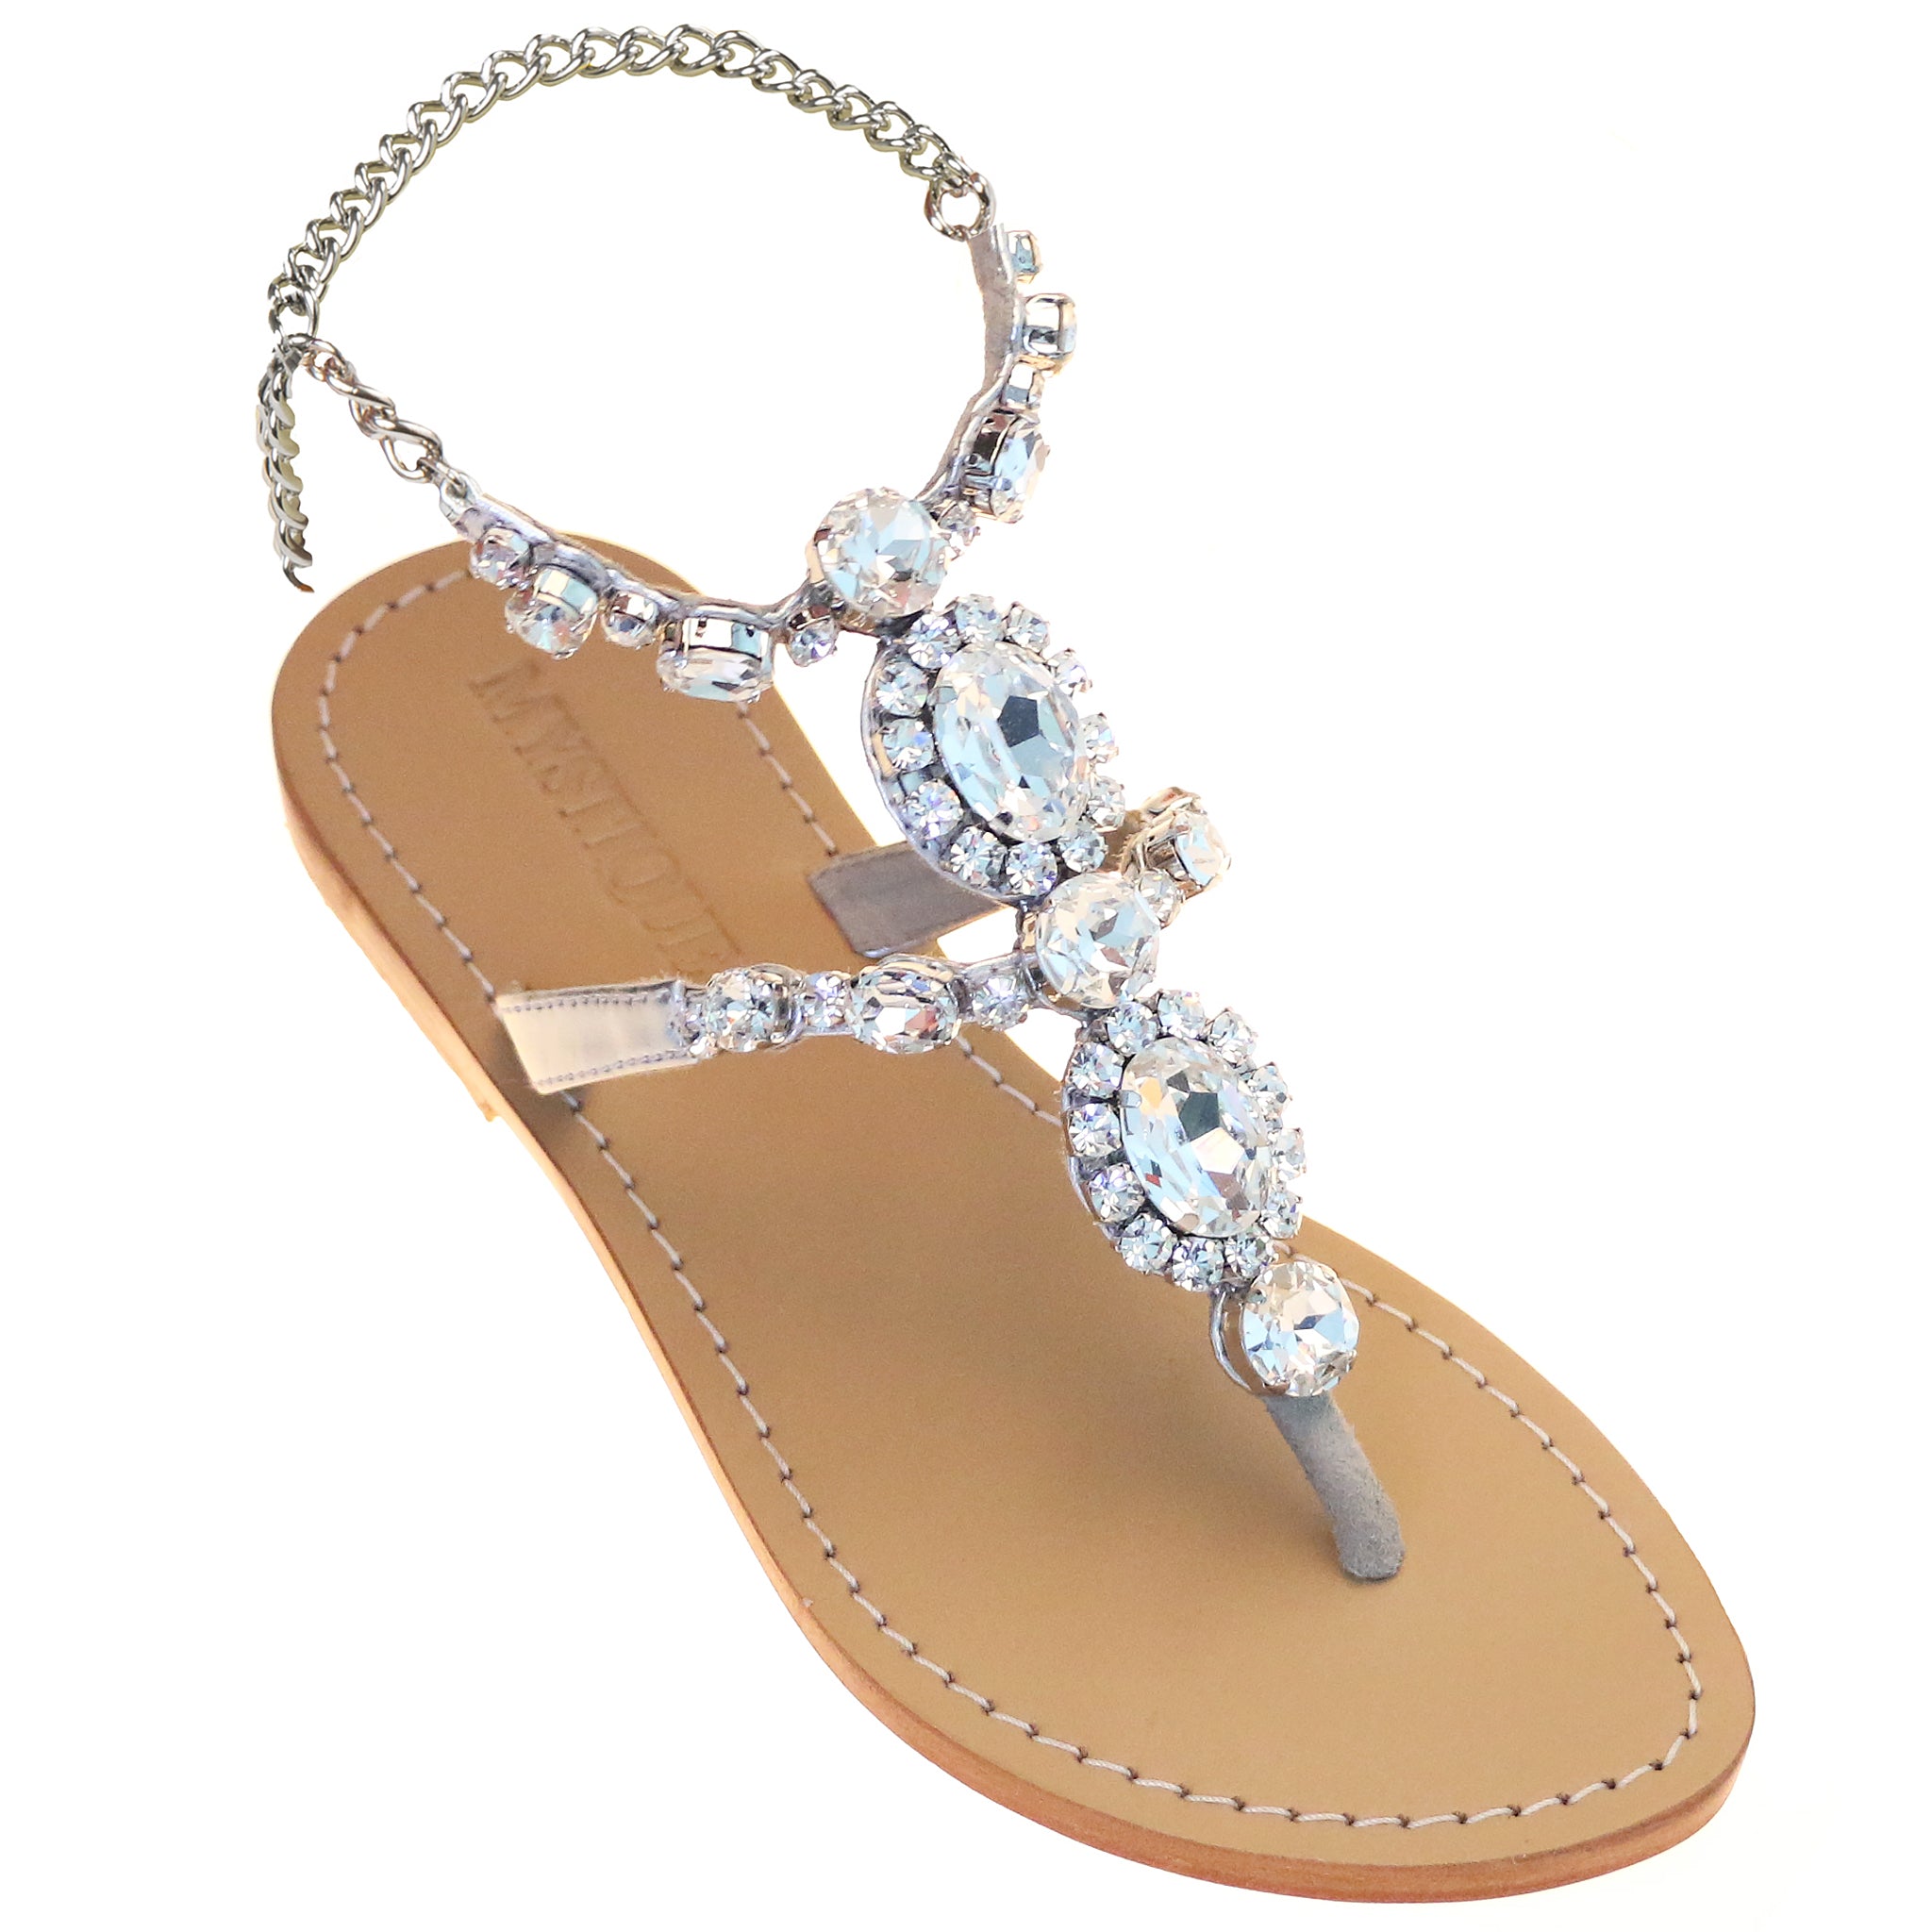 Brusque - Women's Silver Leather Jeweled Sandals - Mystique Sandals